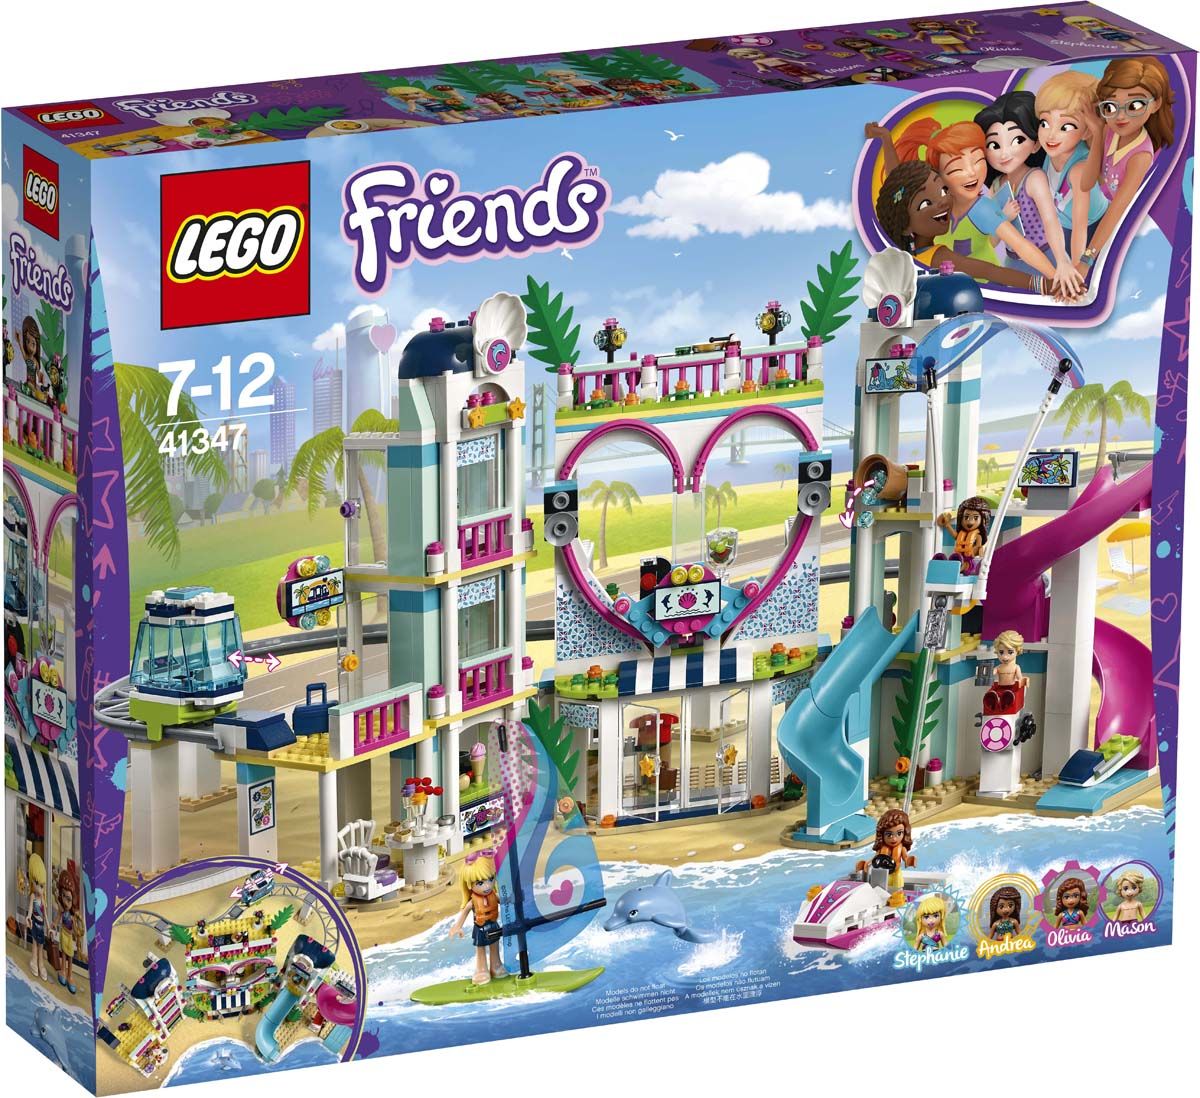 LEGO Friends 41347  - 